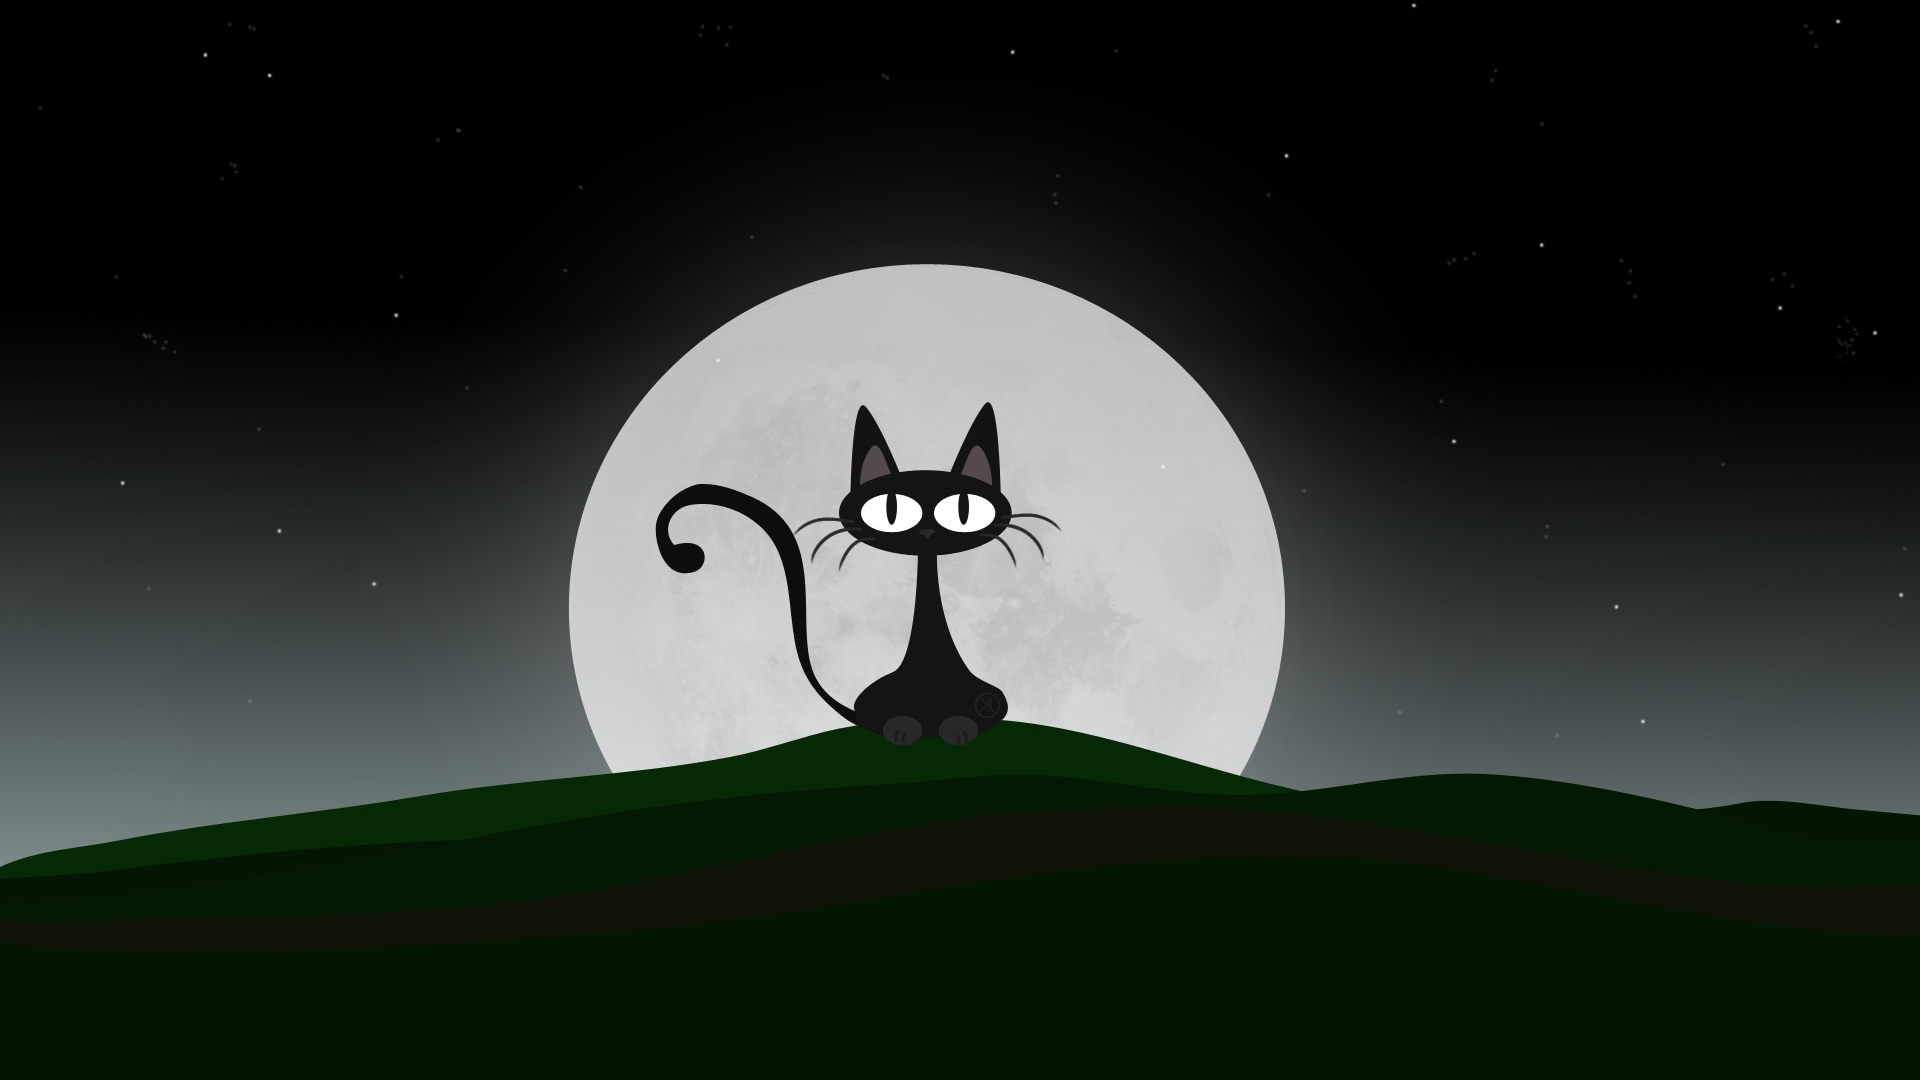 Кот на фоне Луны